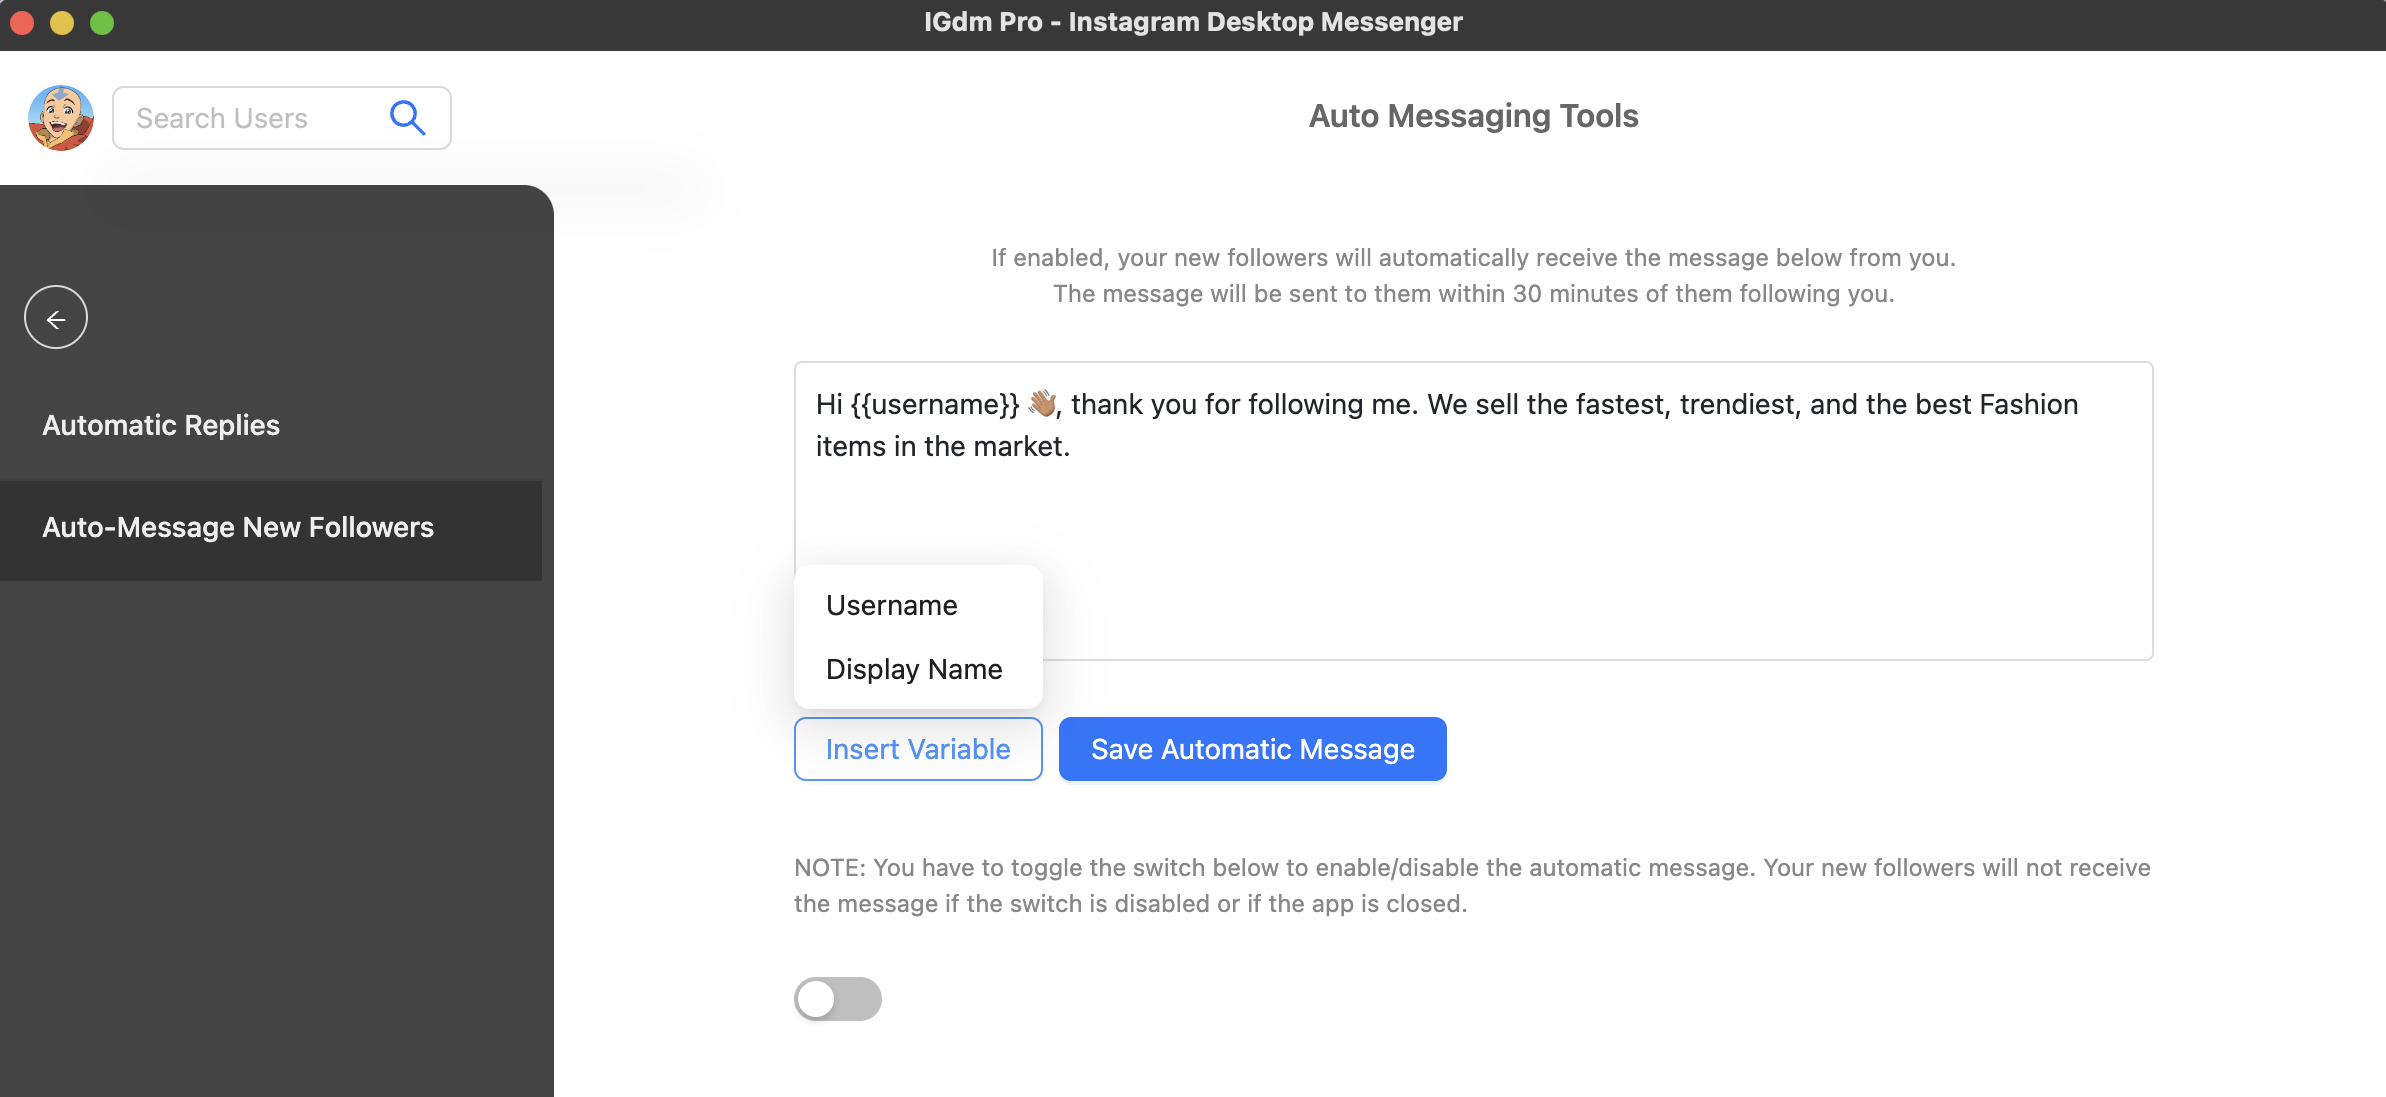 IGdm Pro auto message tools view